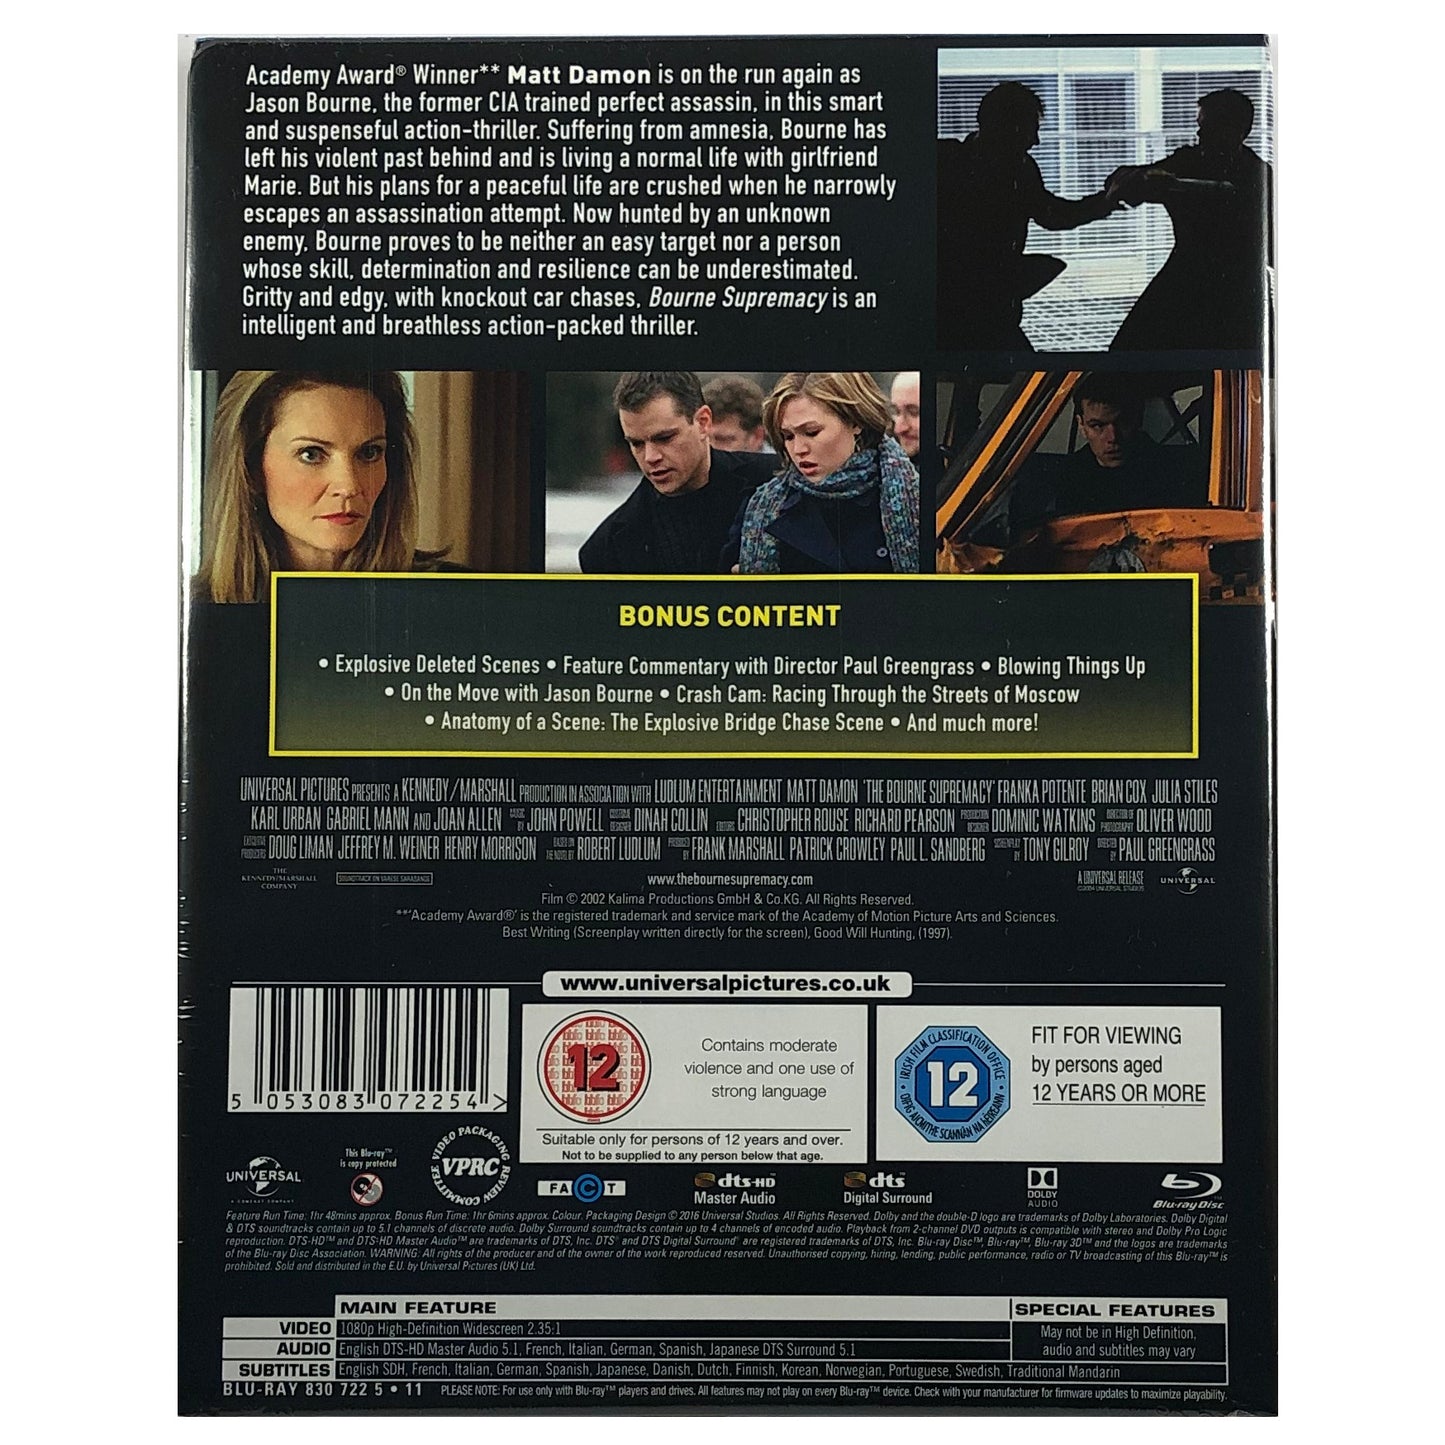 The Bourne Supremacy Blu-Ray Steelbook